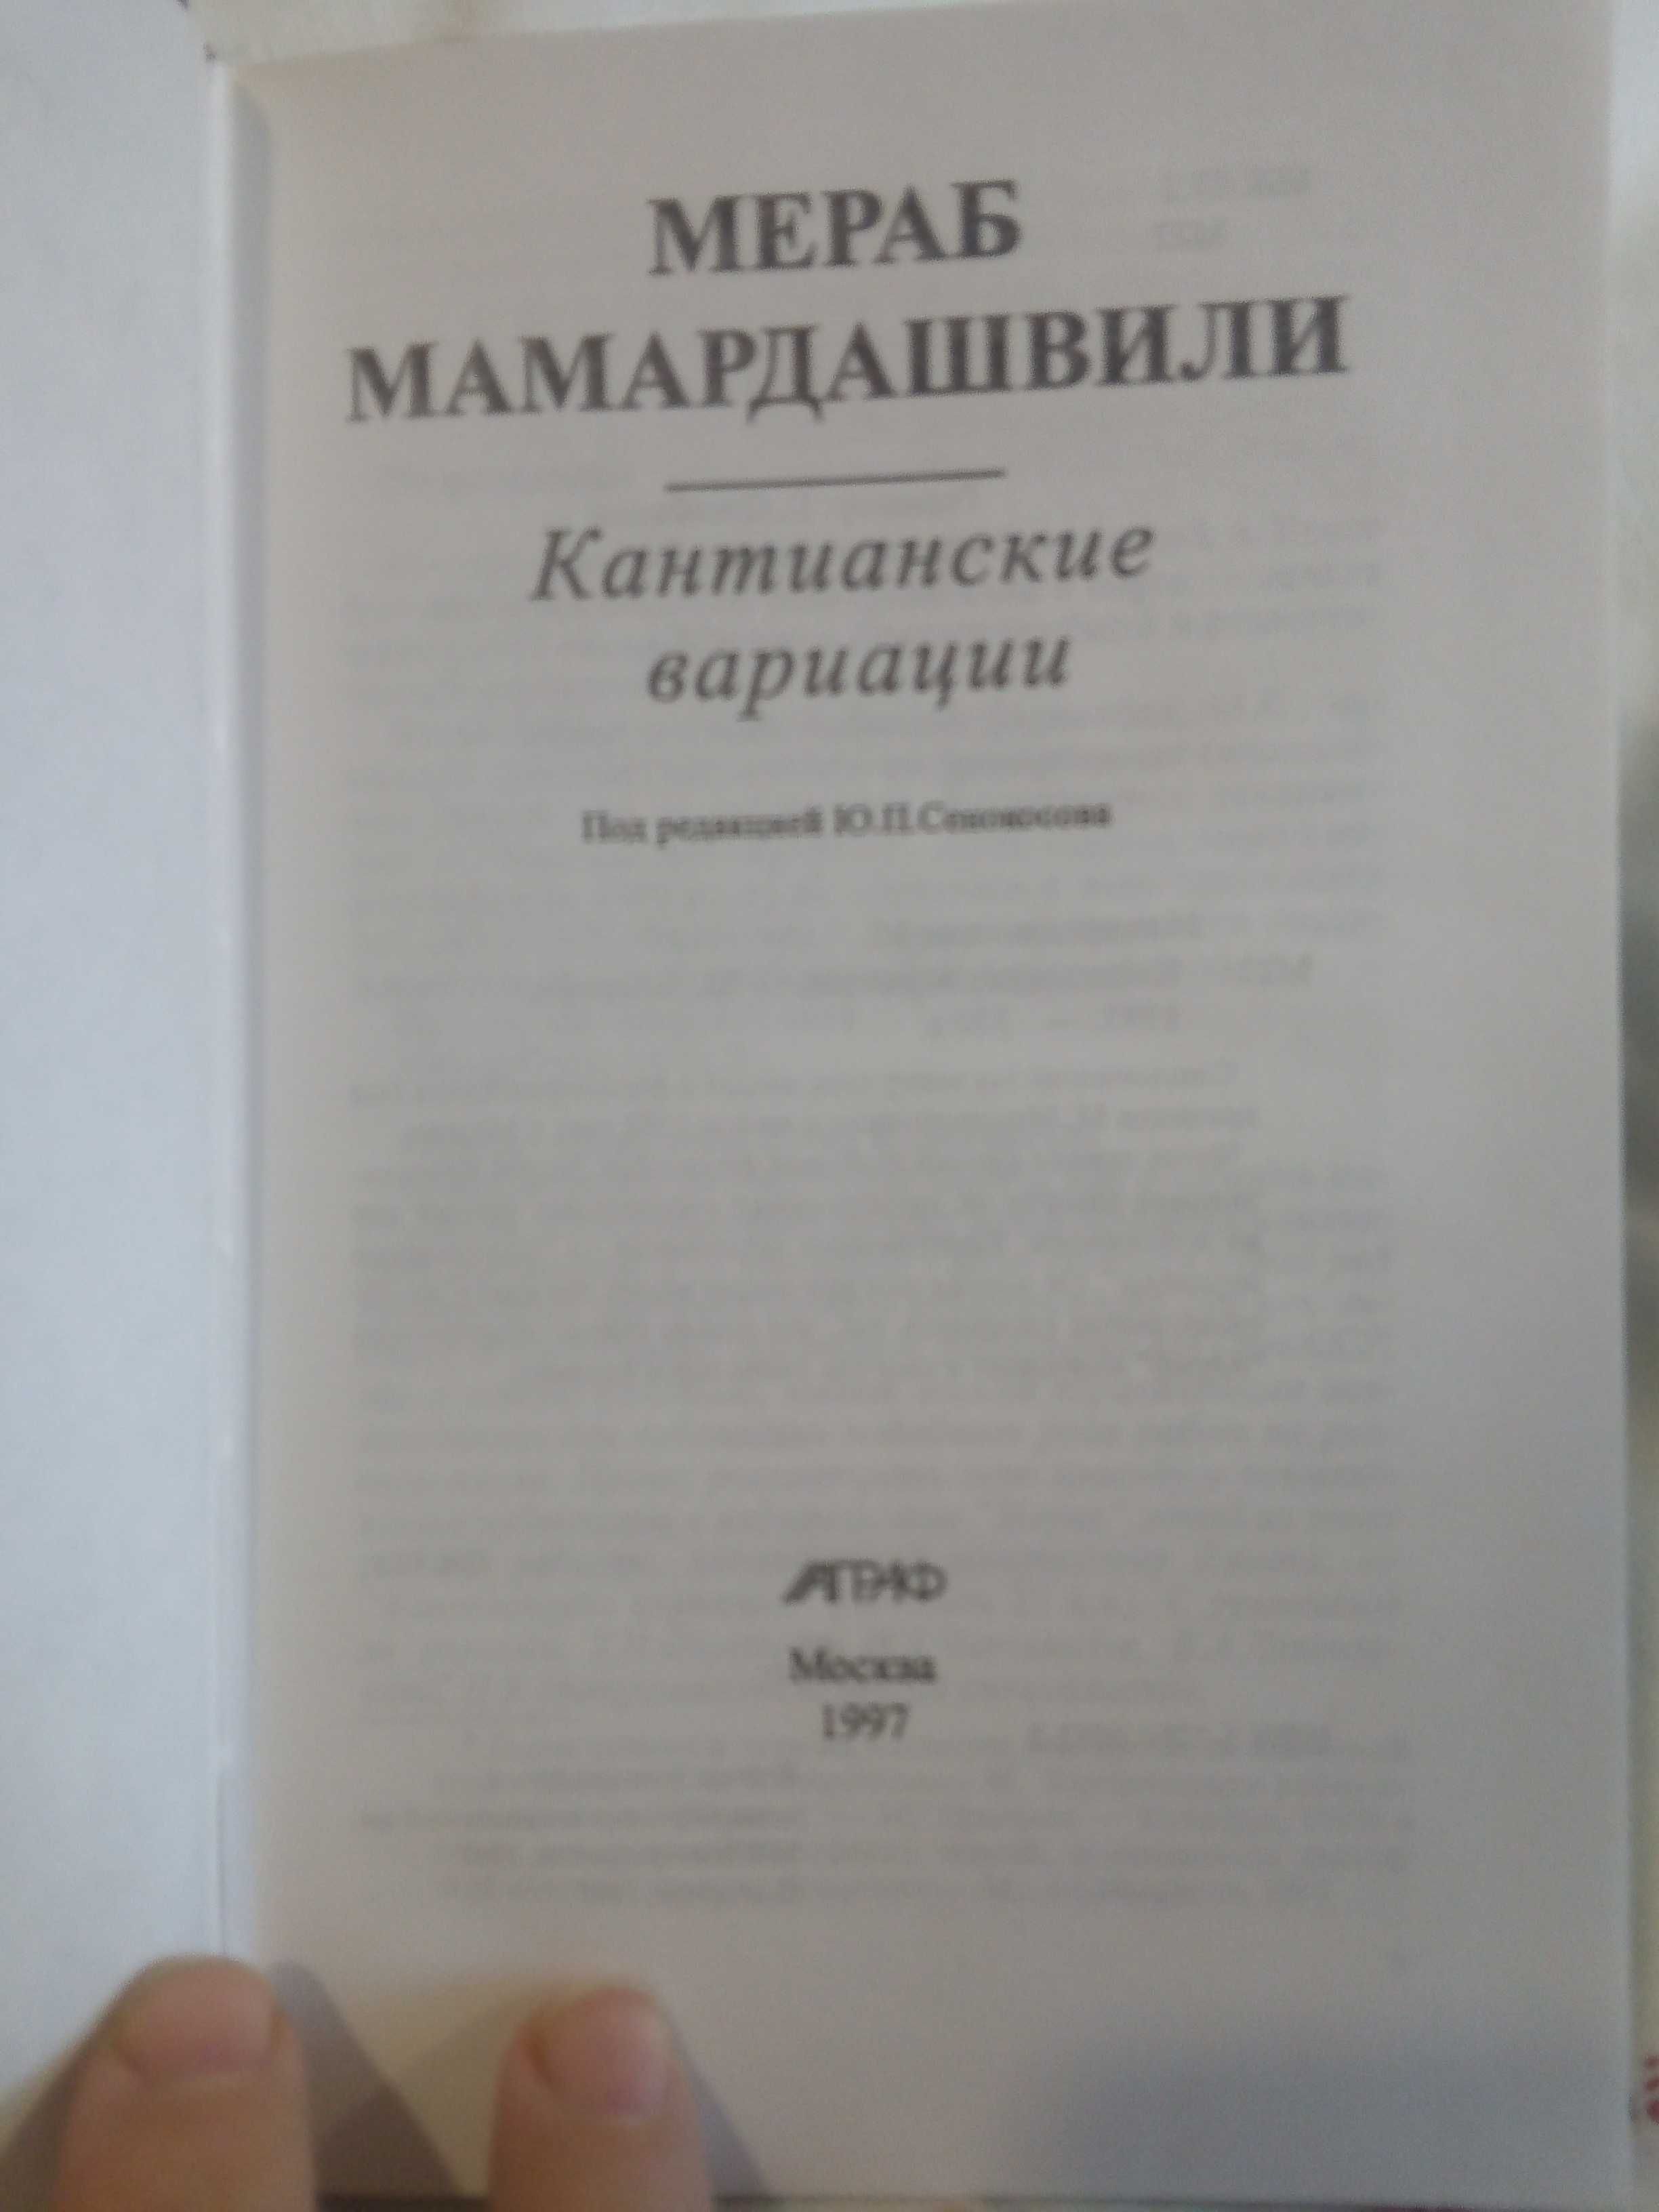 Мераб Мамардашвили Кантианские вариации